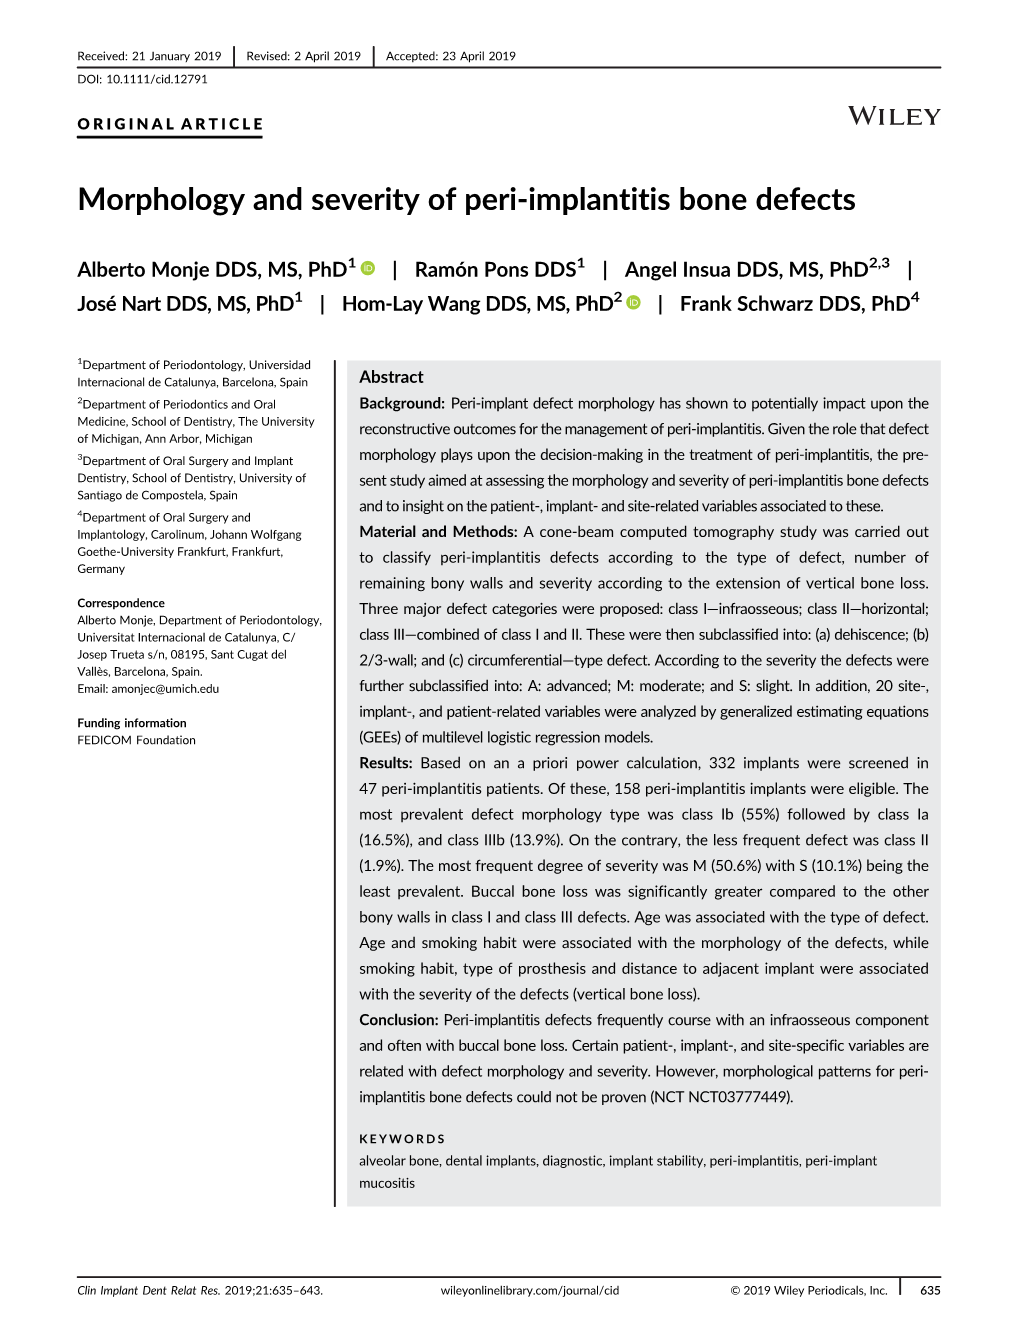 Morphology and Severity of Peri-Implantitis Bone Defects